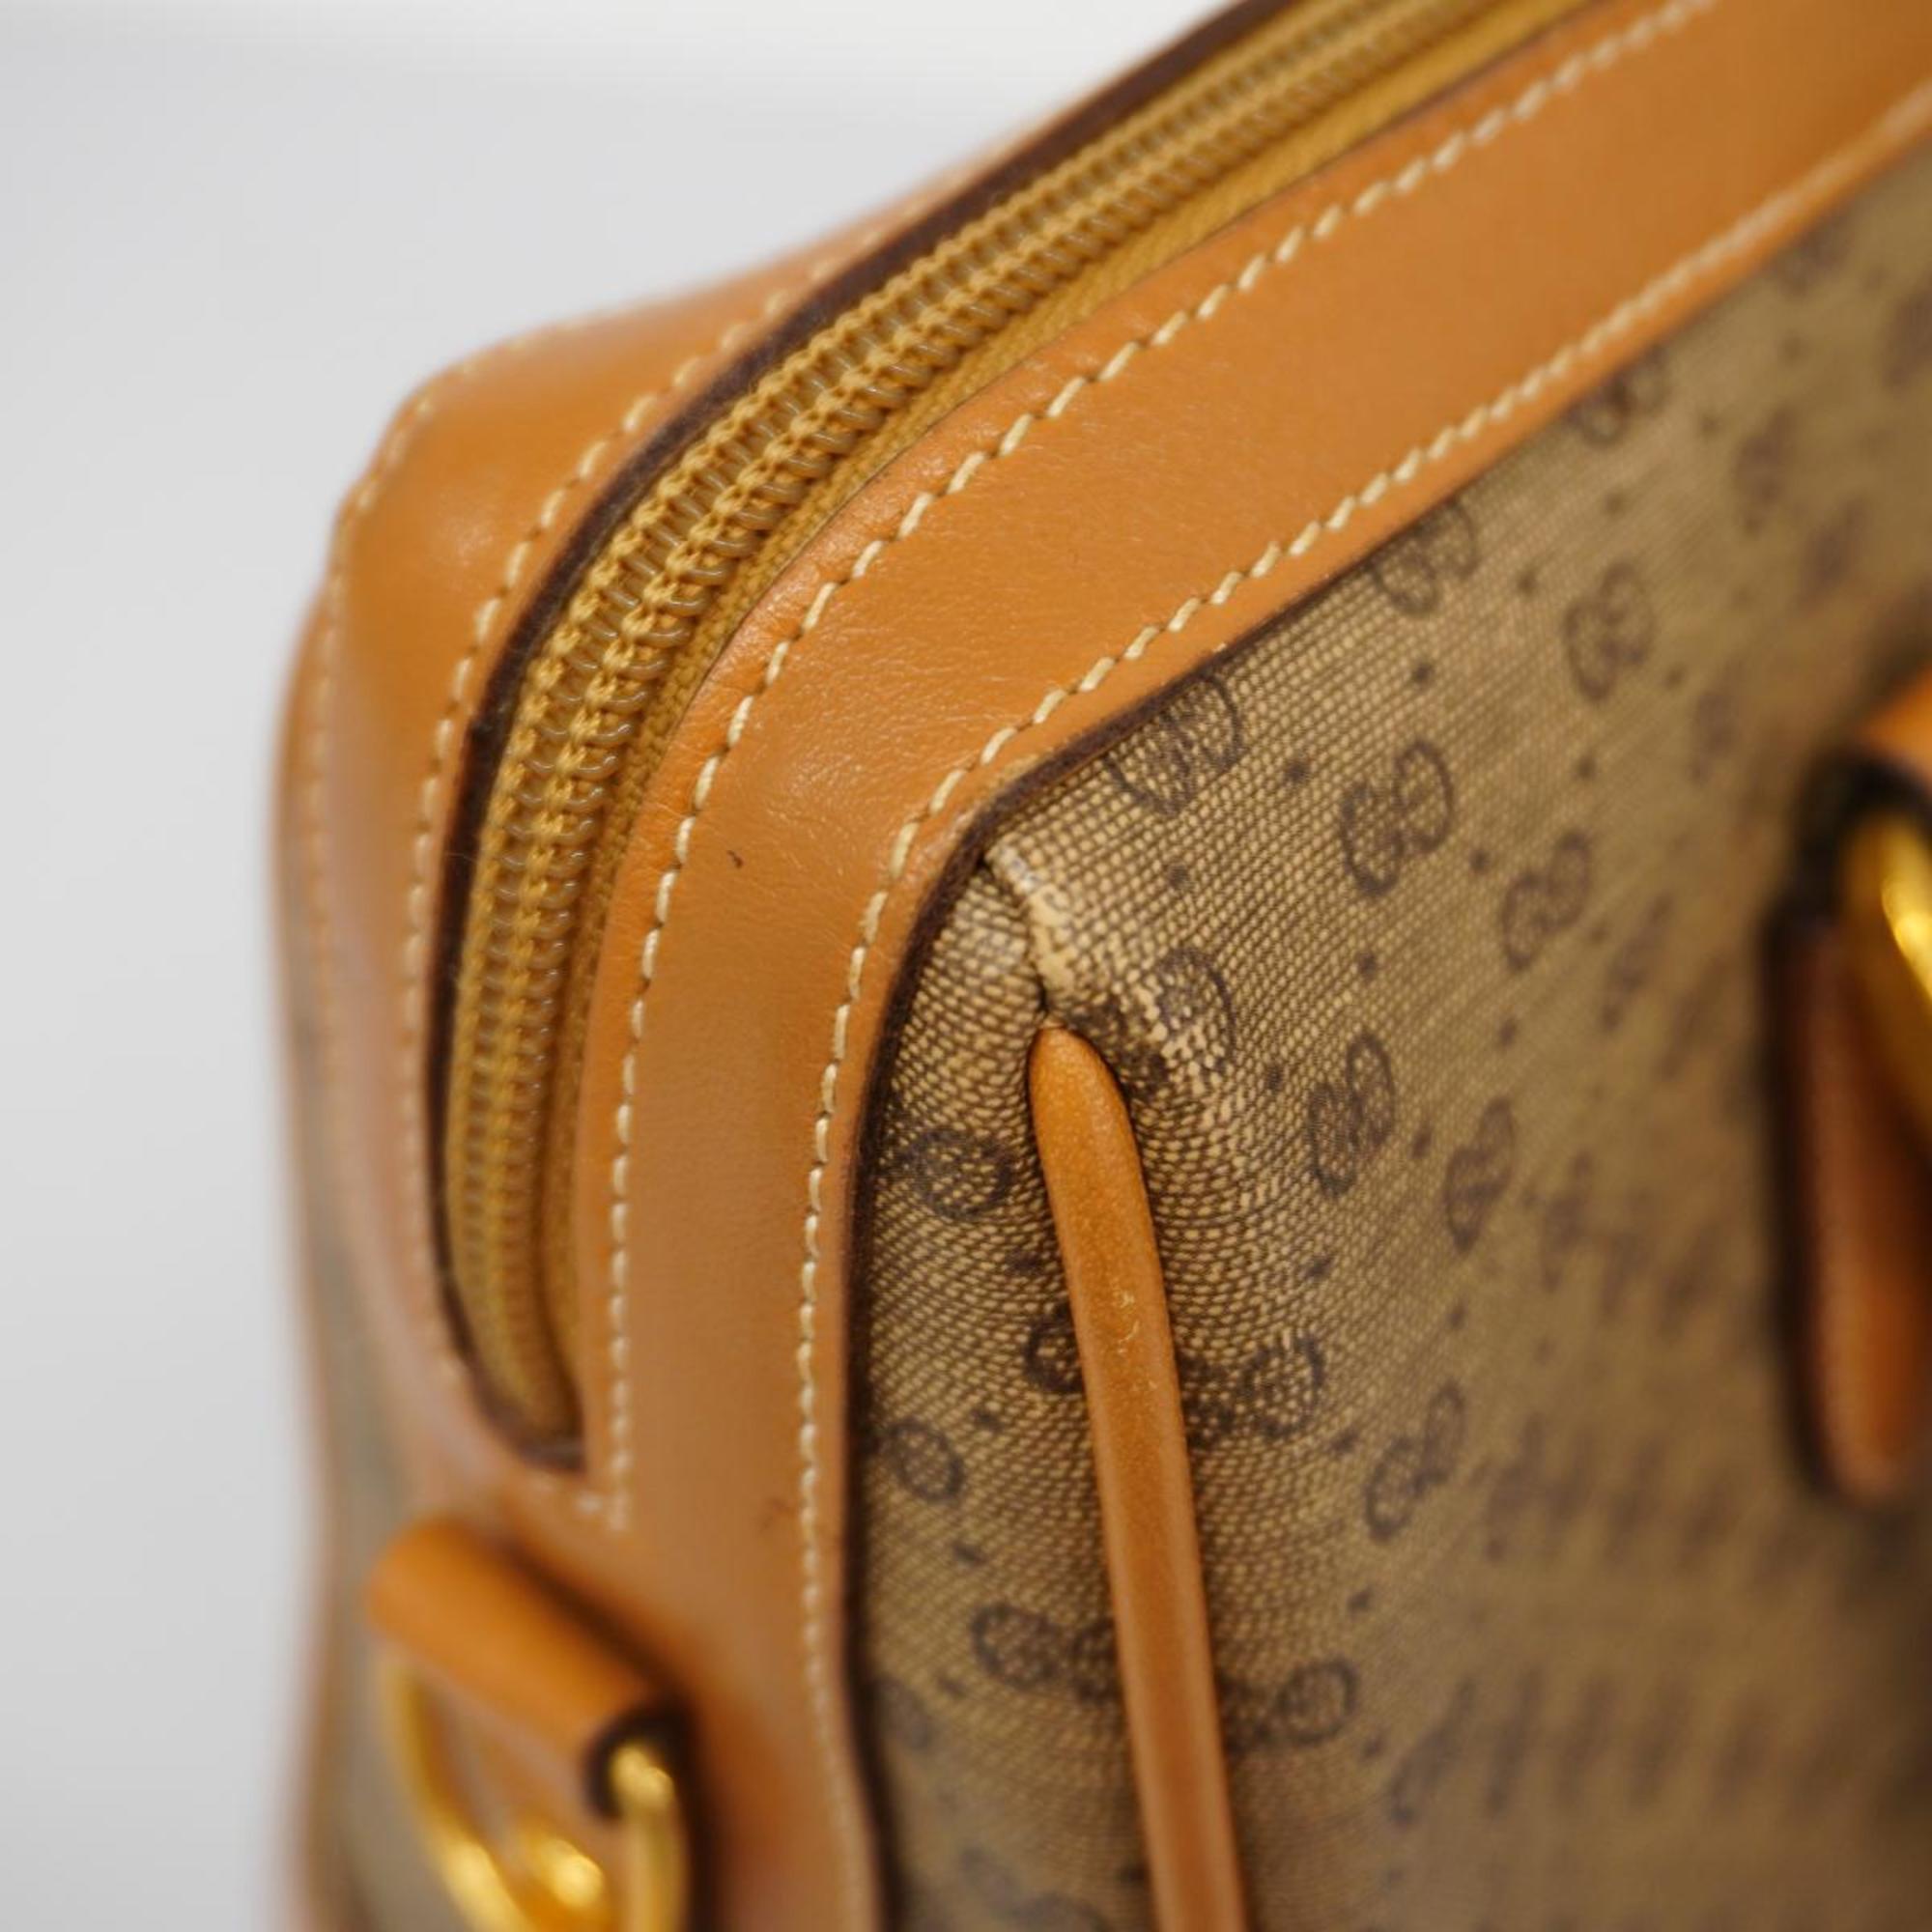 Gucci handbag Micro GG 002 084 0033 leather brown ladies